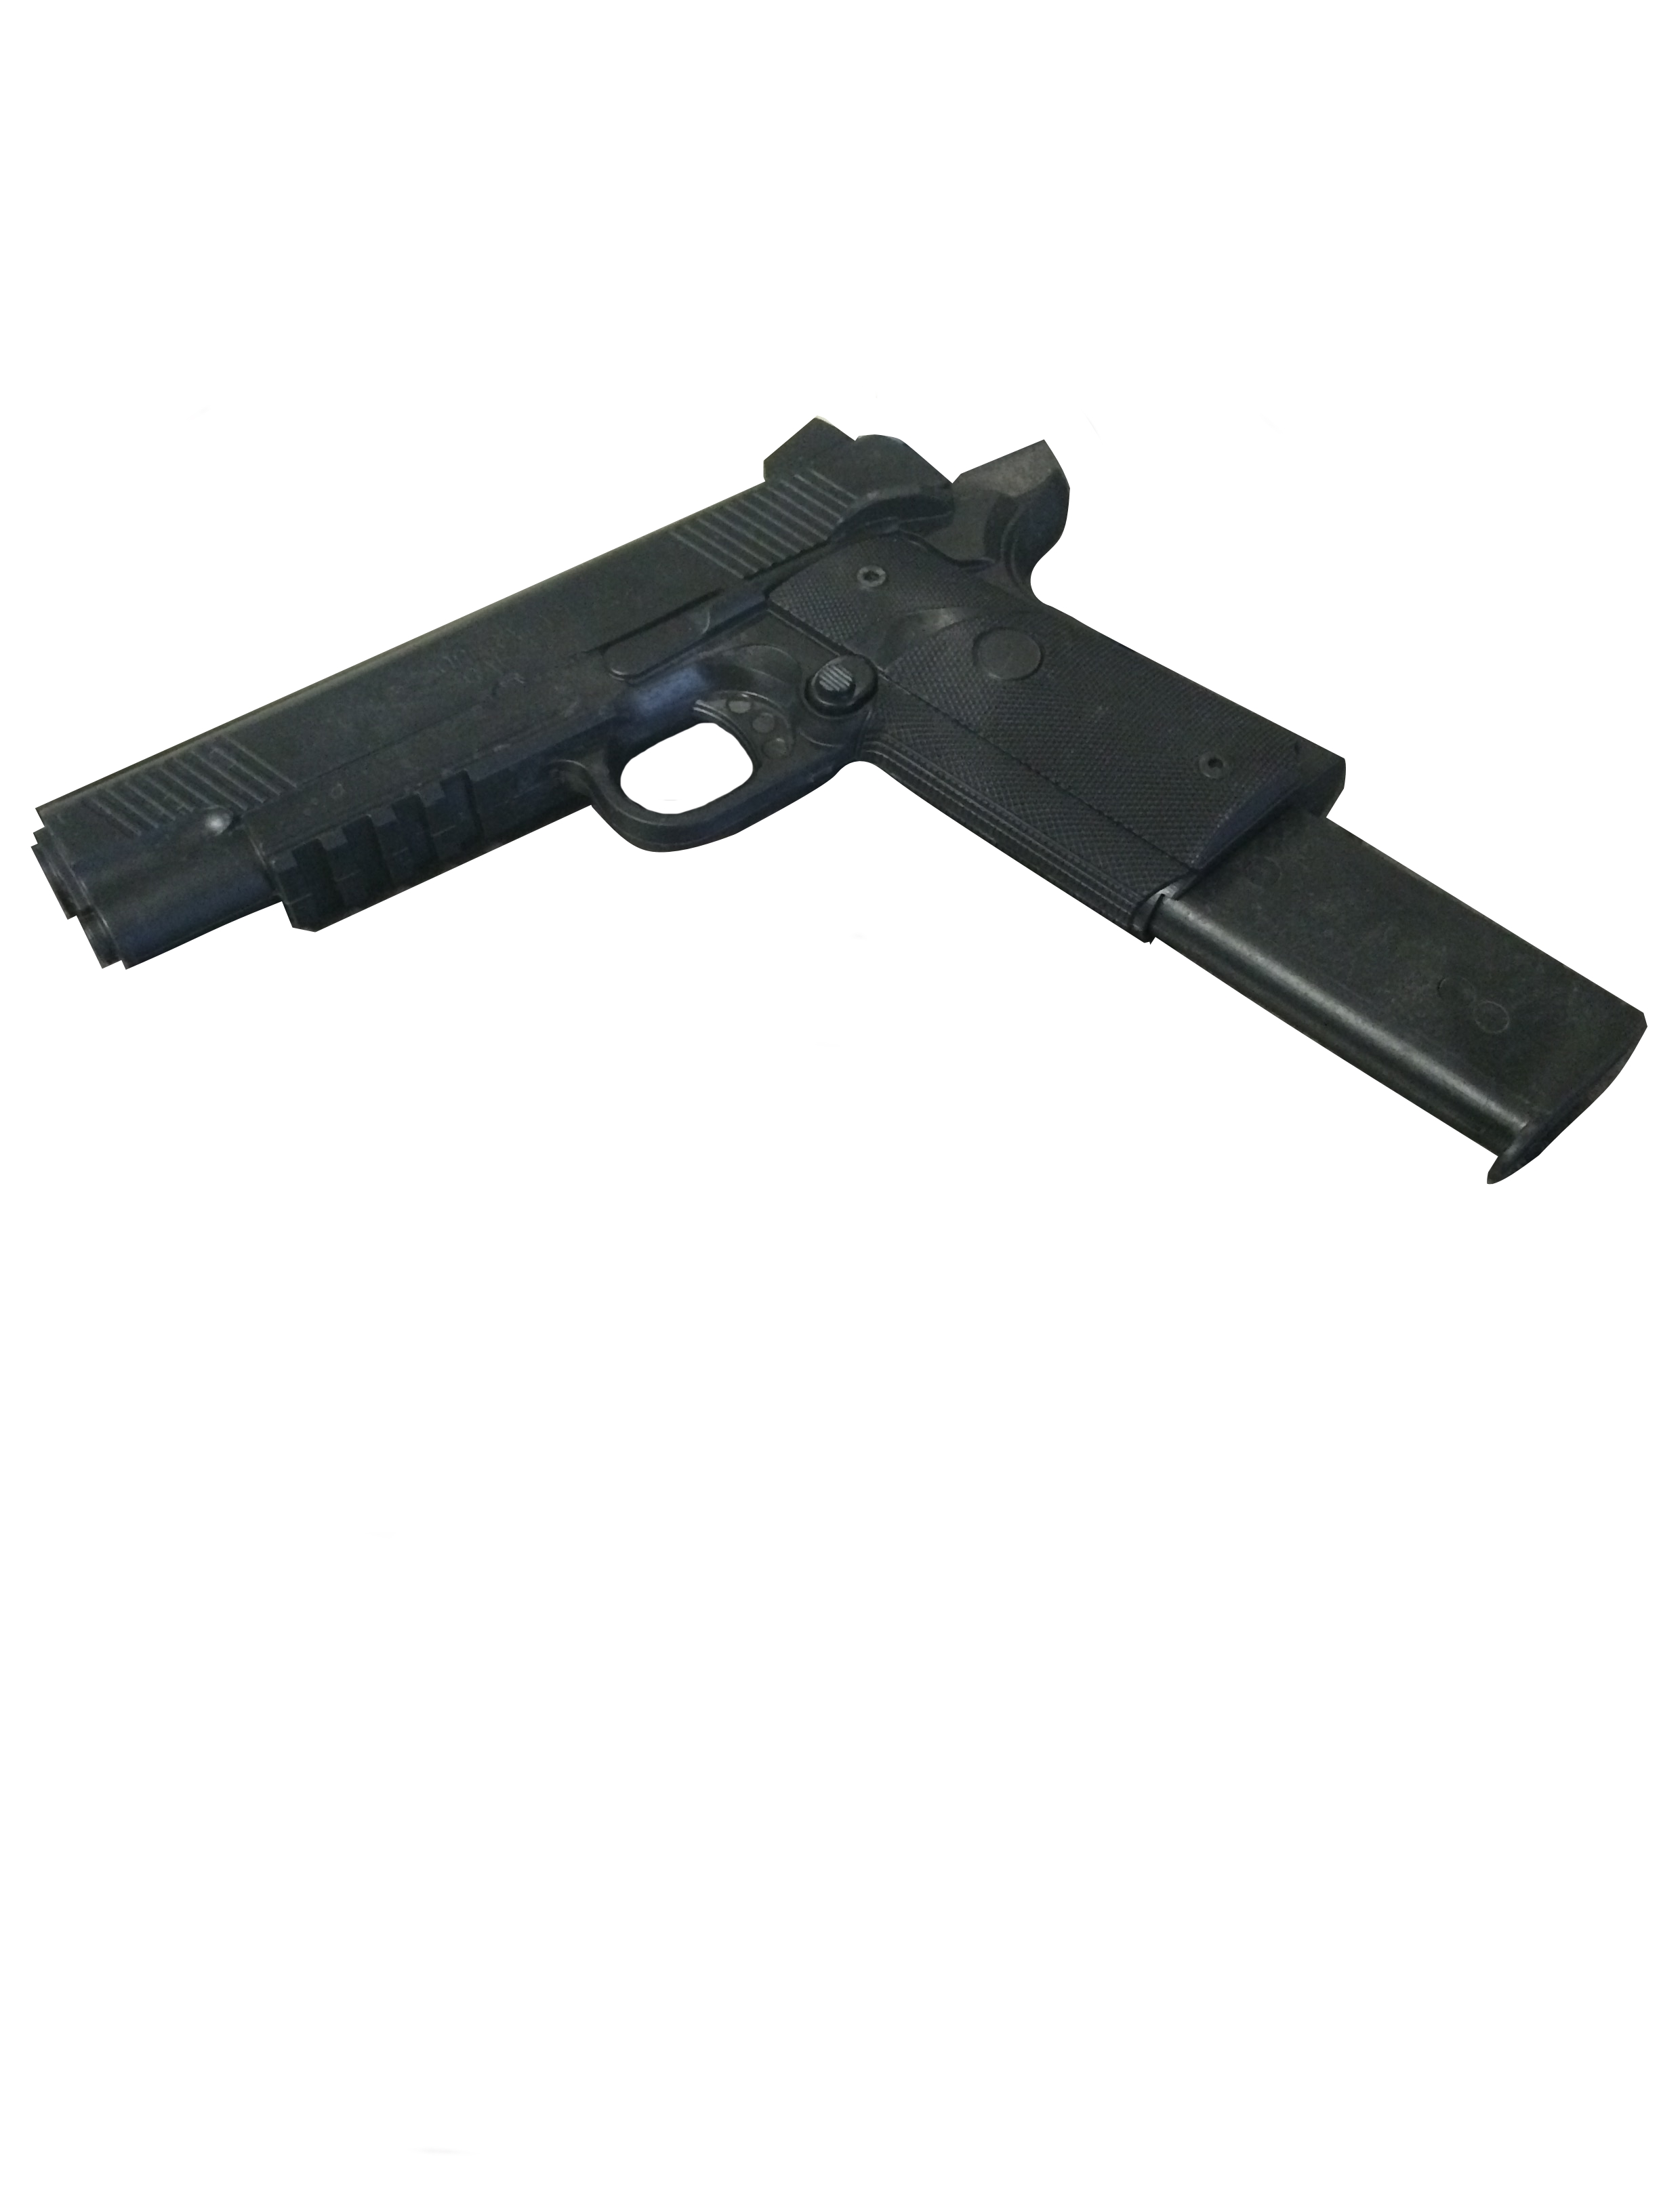 Kunststoff-Pistole schwarz, Magazin herausnehmbar